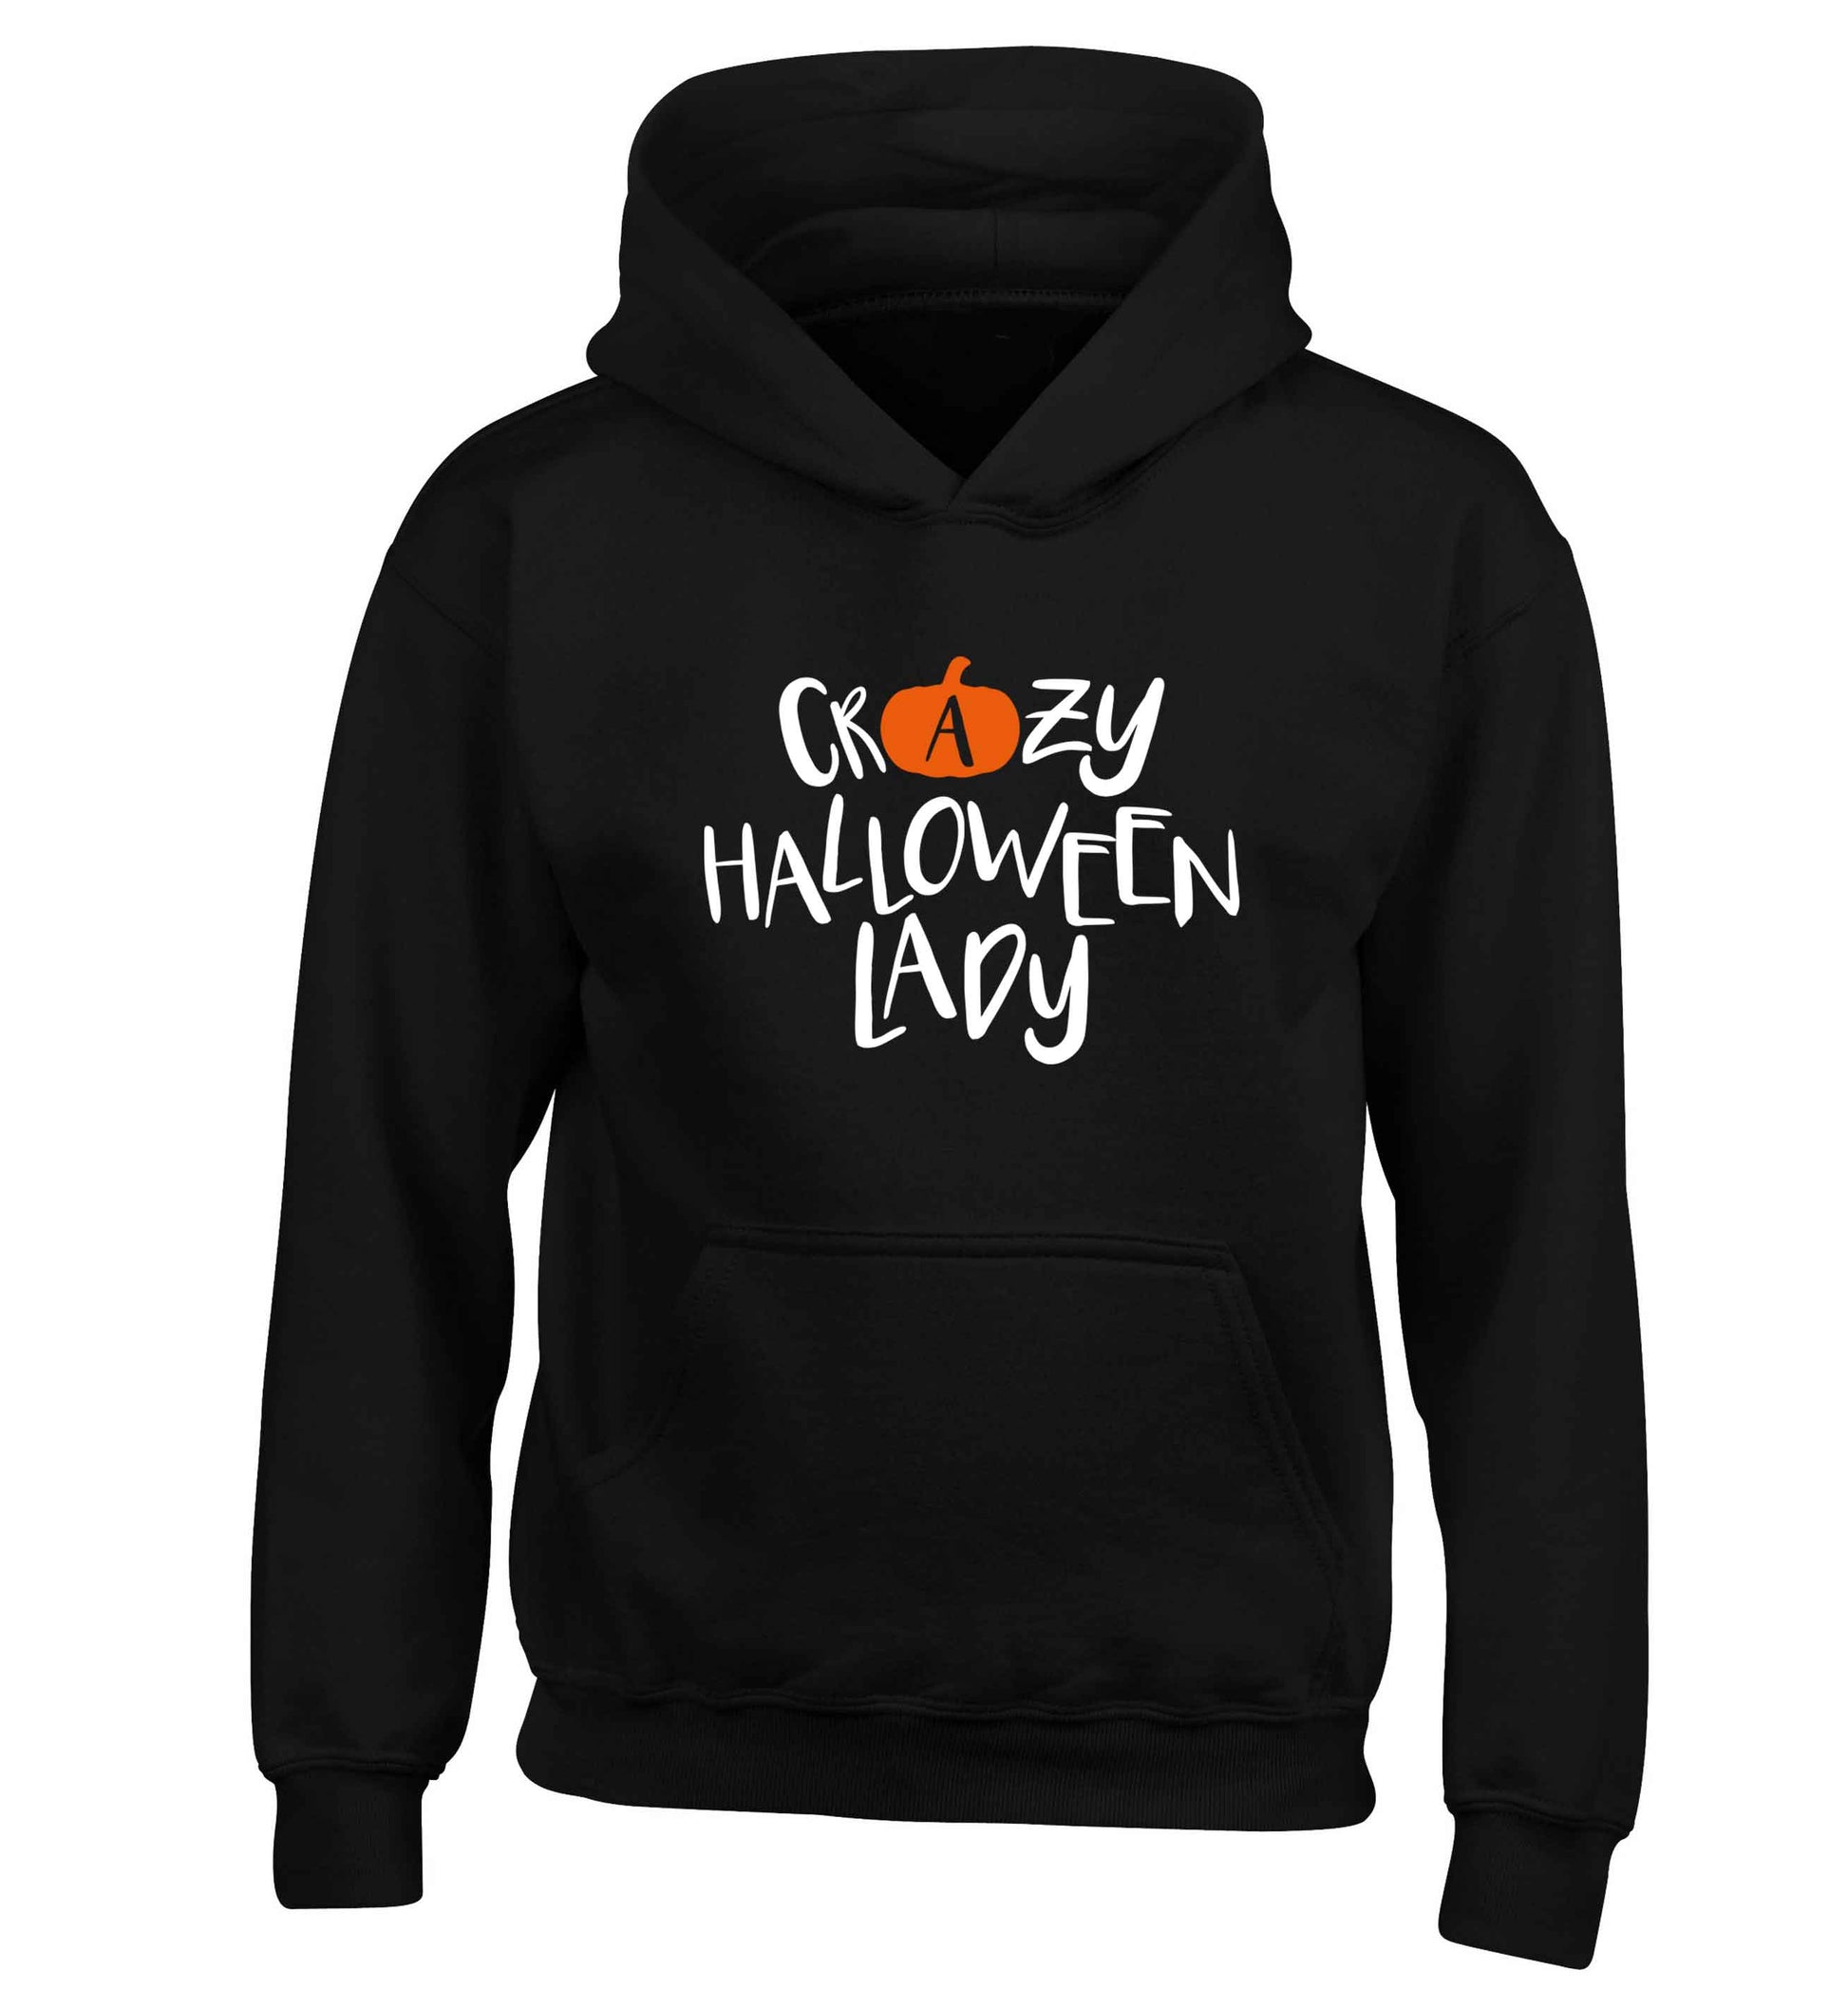 Crazy halloween lady children's black hoodie 12-13 Years